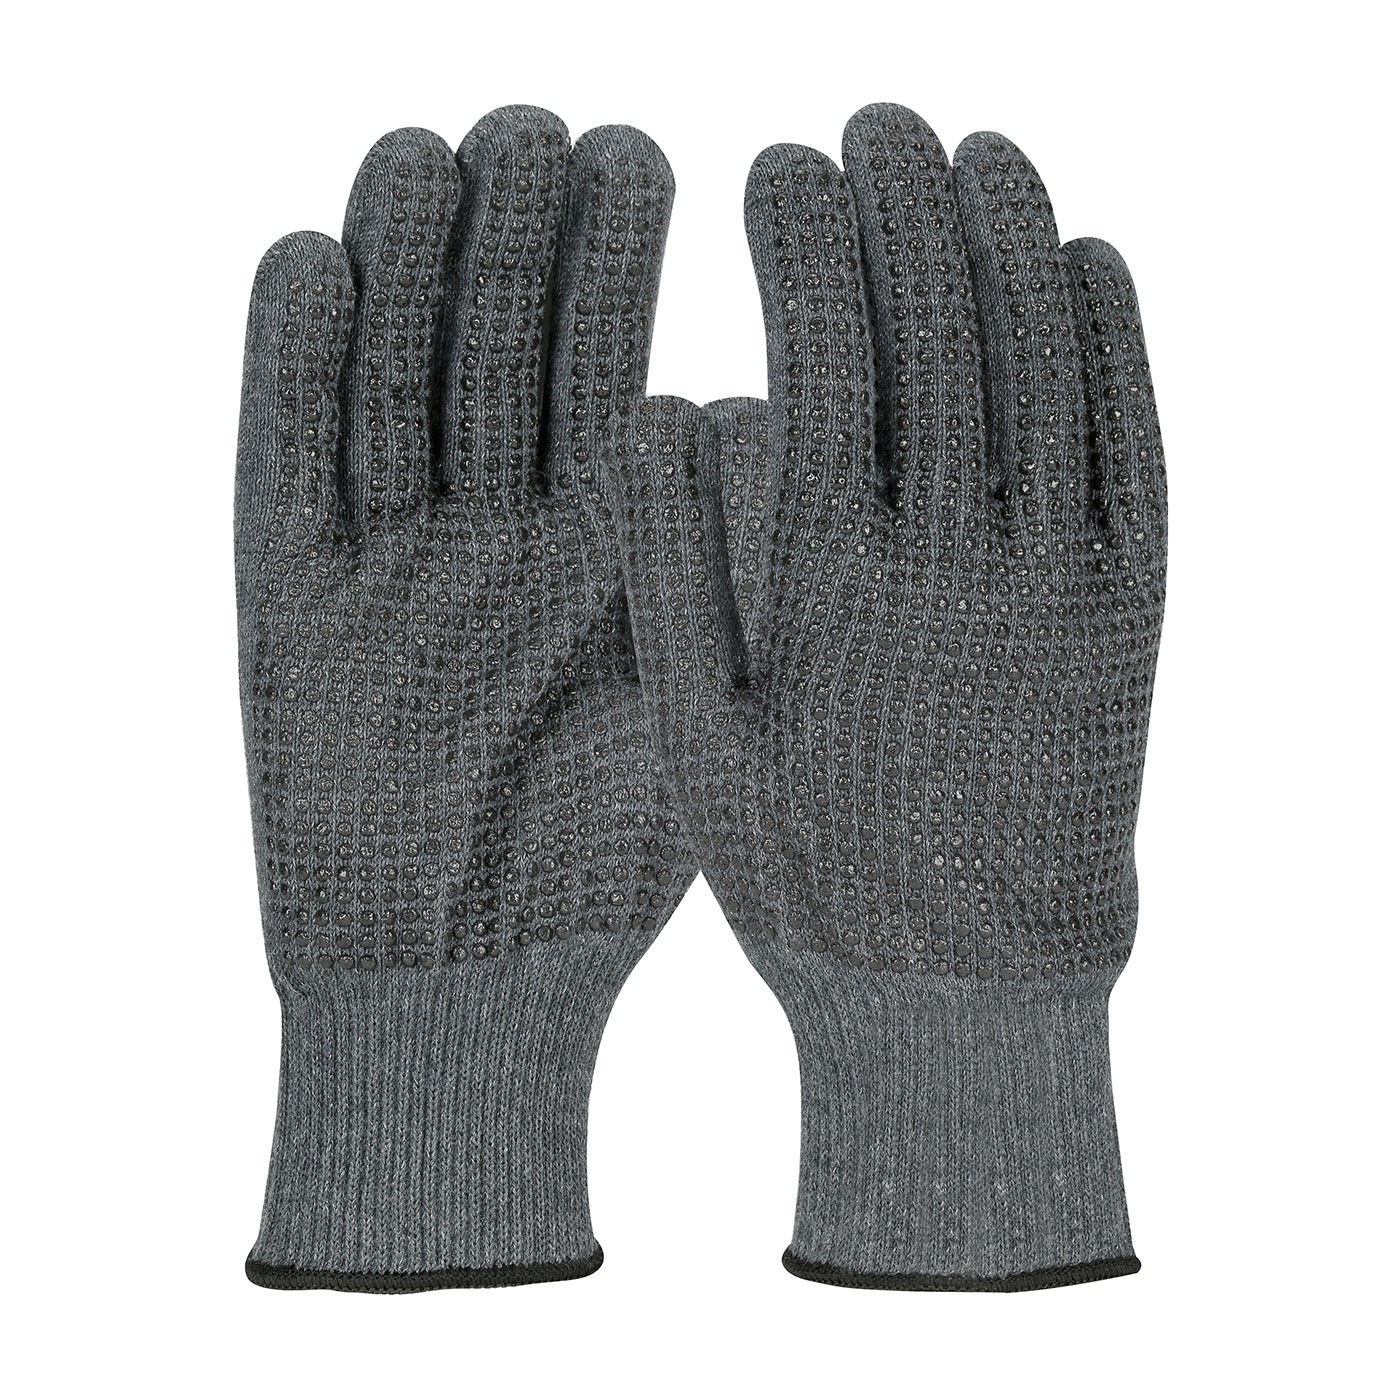 Kut Gard® Seamless Knit ACP / Kevlar® Blended Glove with PVC Dot Grip - Lightweight  (#08-KAB750PDD)